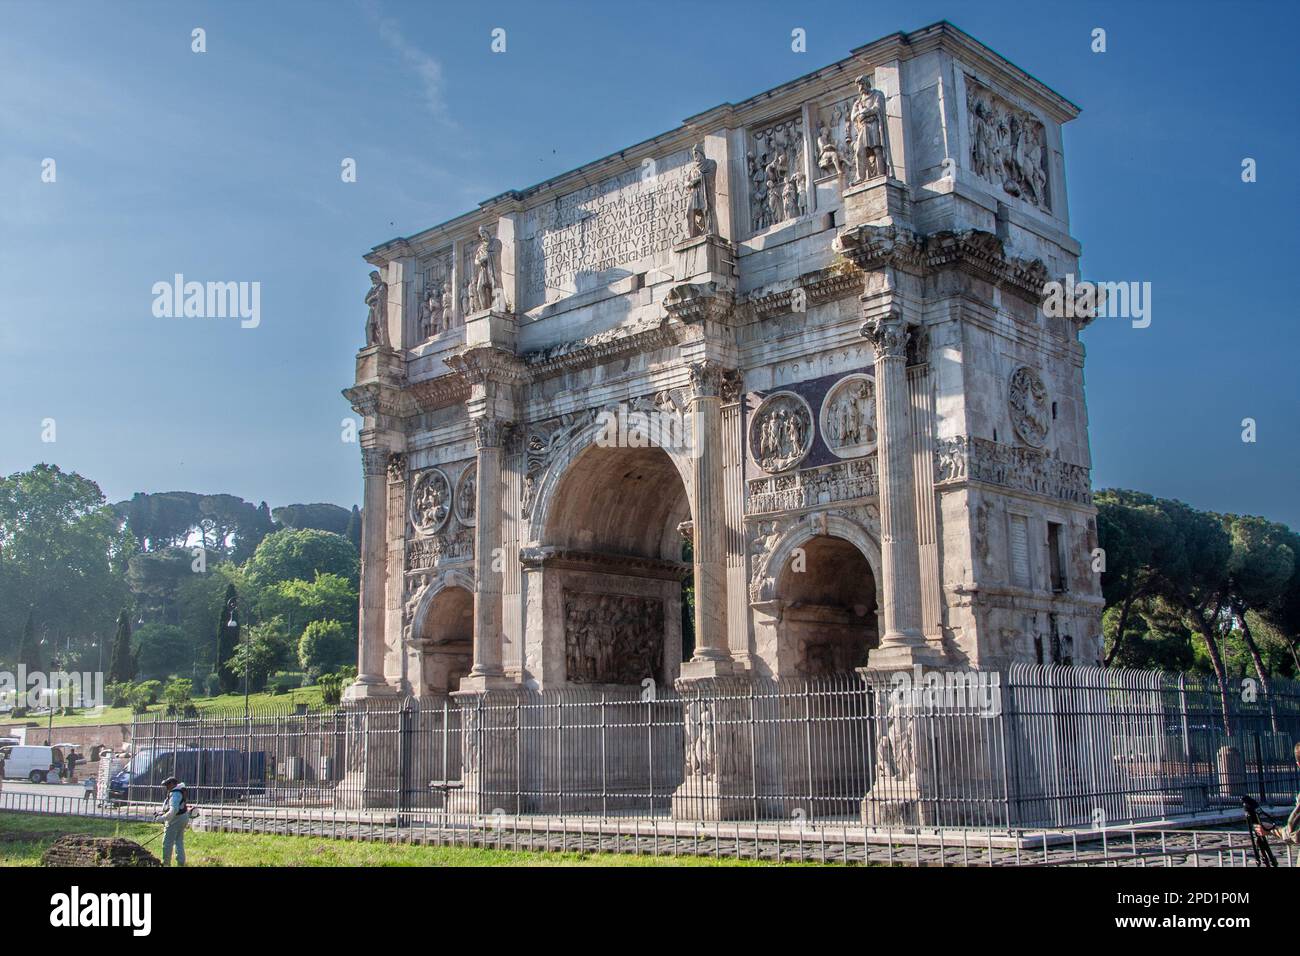 Italy, Rome, Arco di Costantino or Arch of Constantine Stock Photo